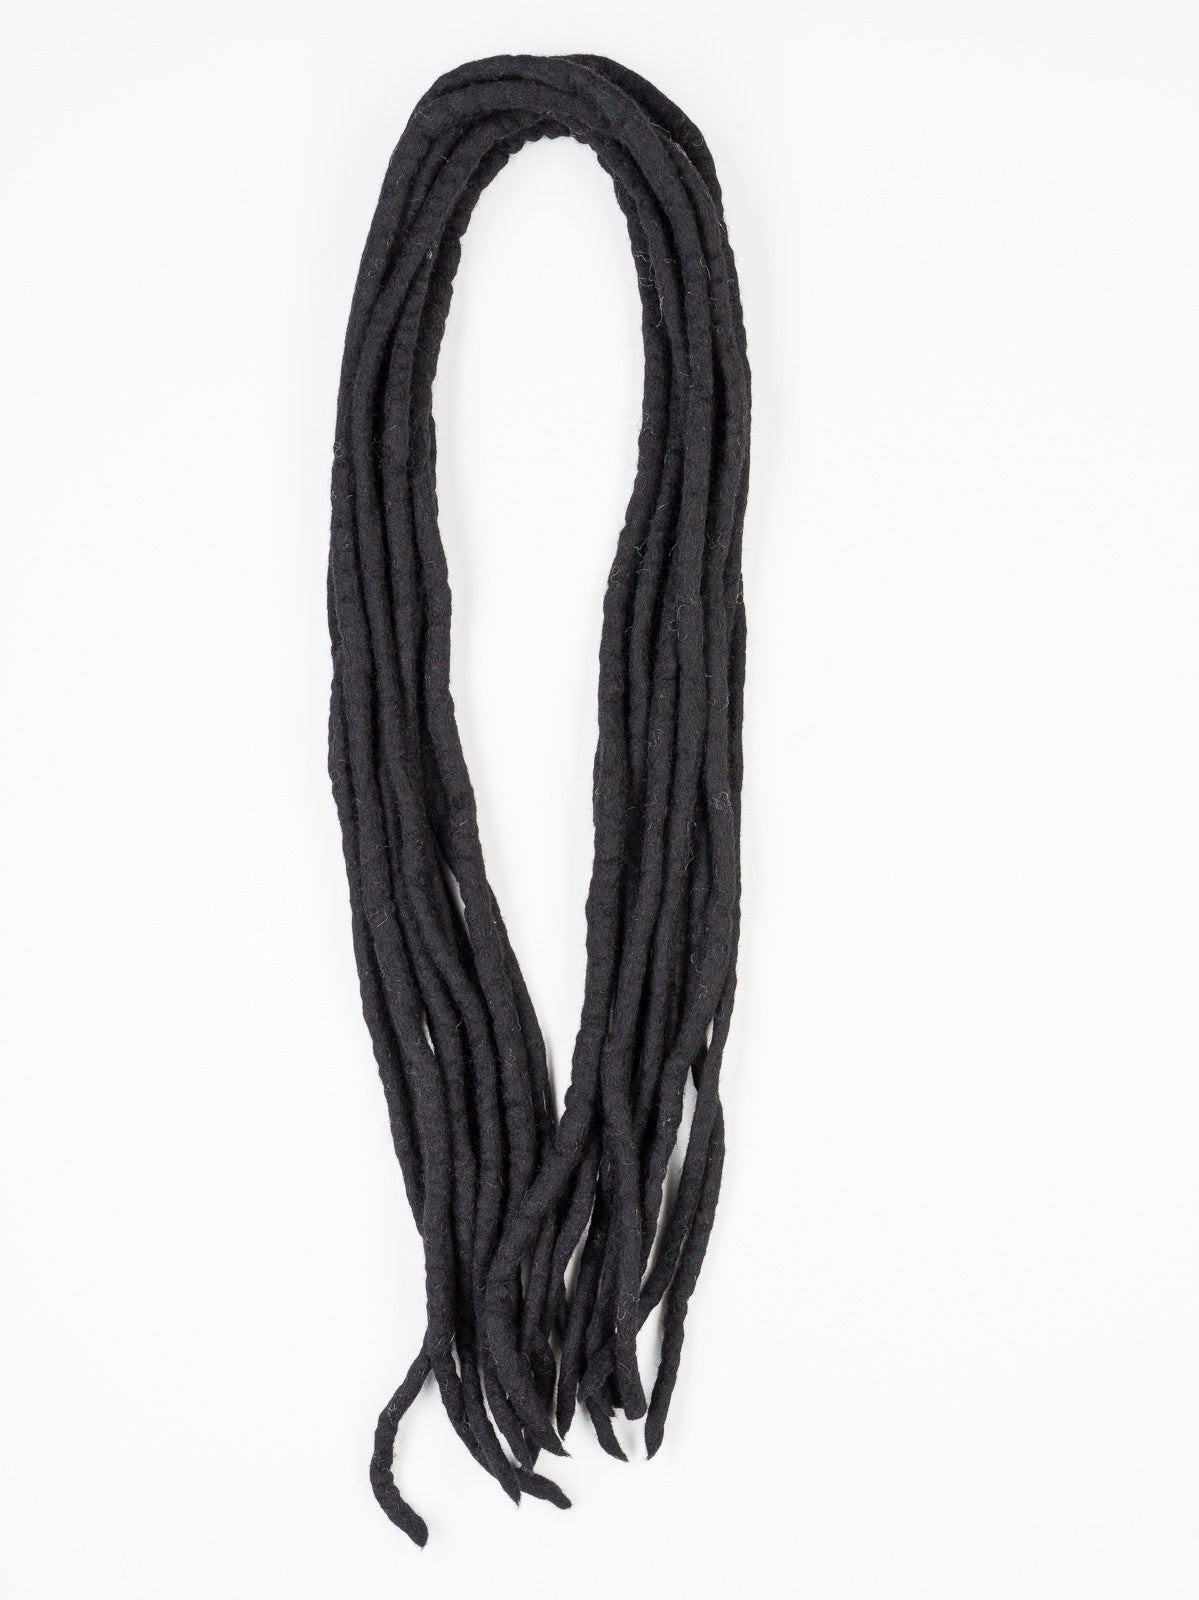 DreadLab - Double Ended Felted Merino Wool Dreadlocks (24"/ 60cm) Black